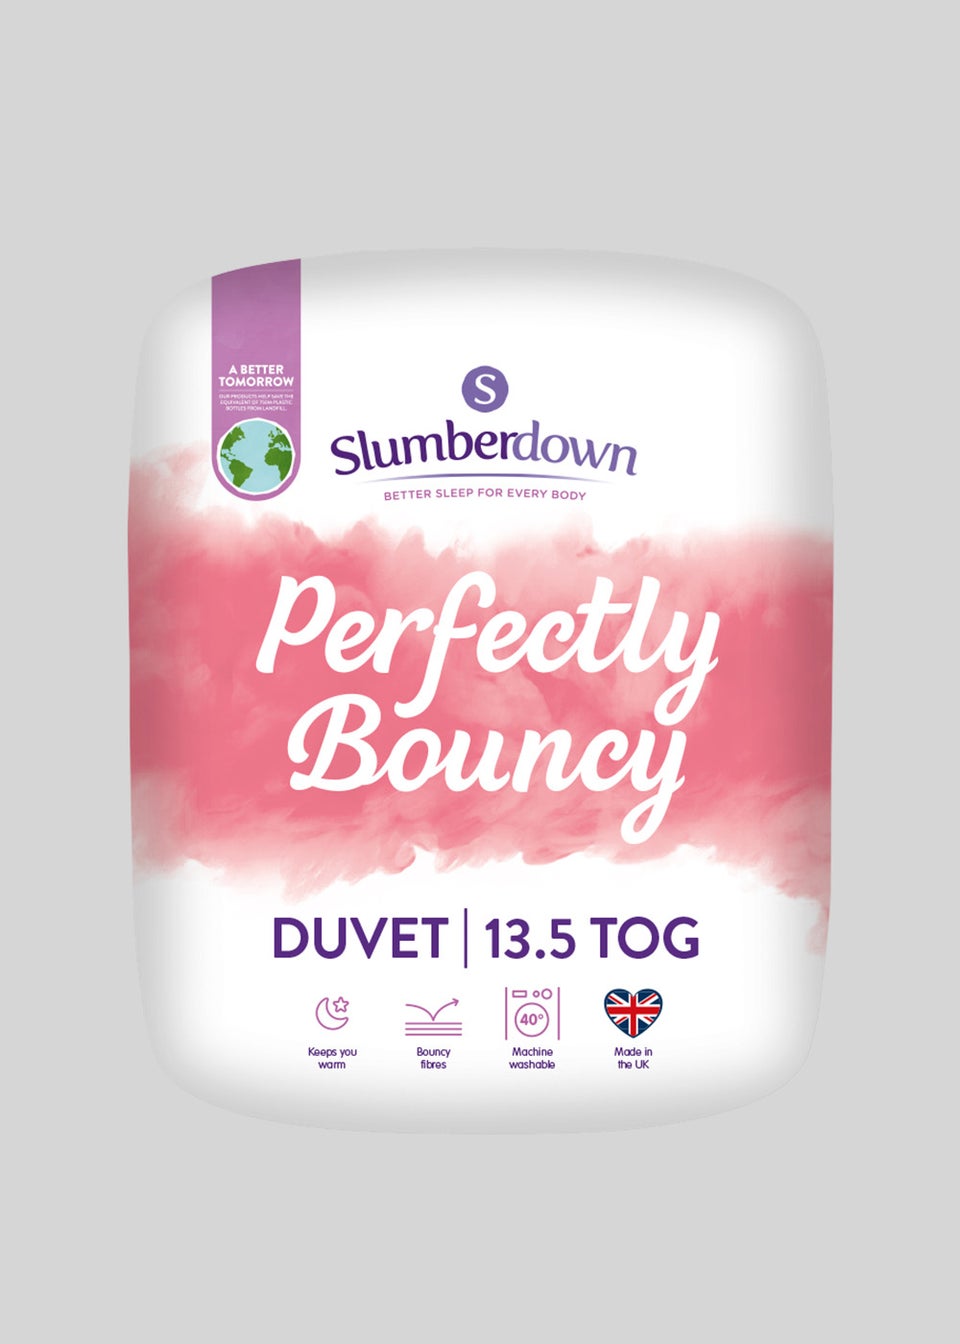 Slumberdown Full & Perfectly Bouncy Duvet (13.5 Tog)